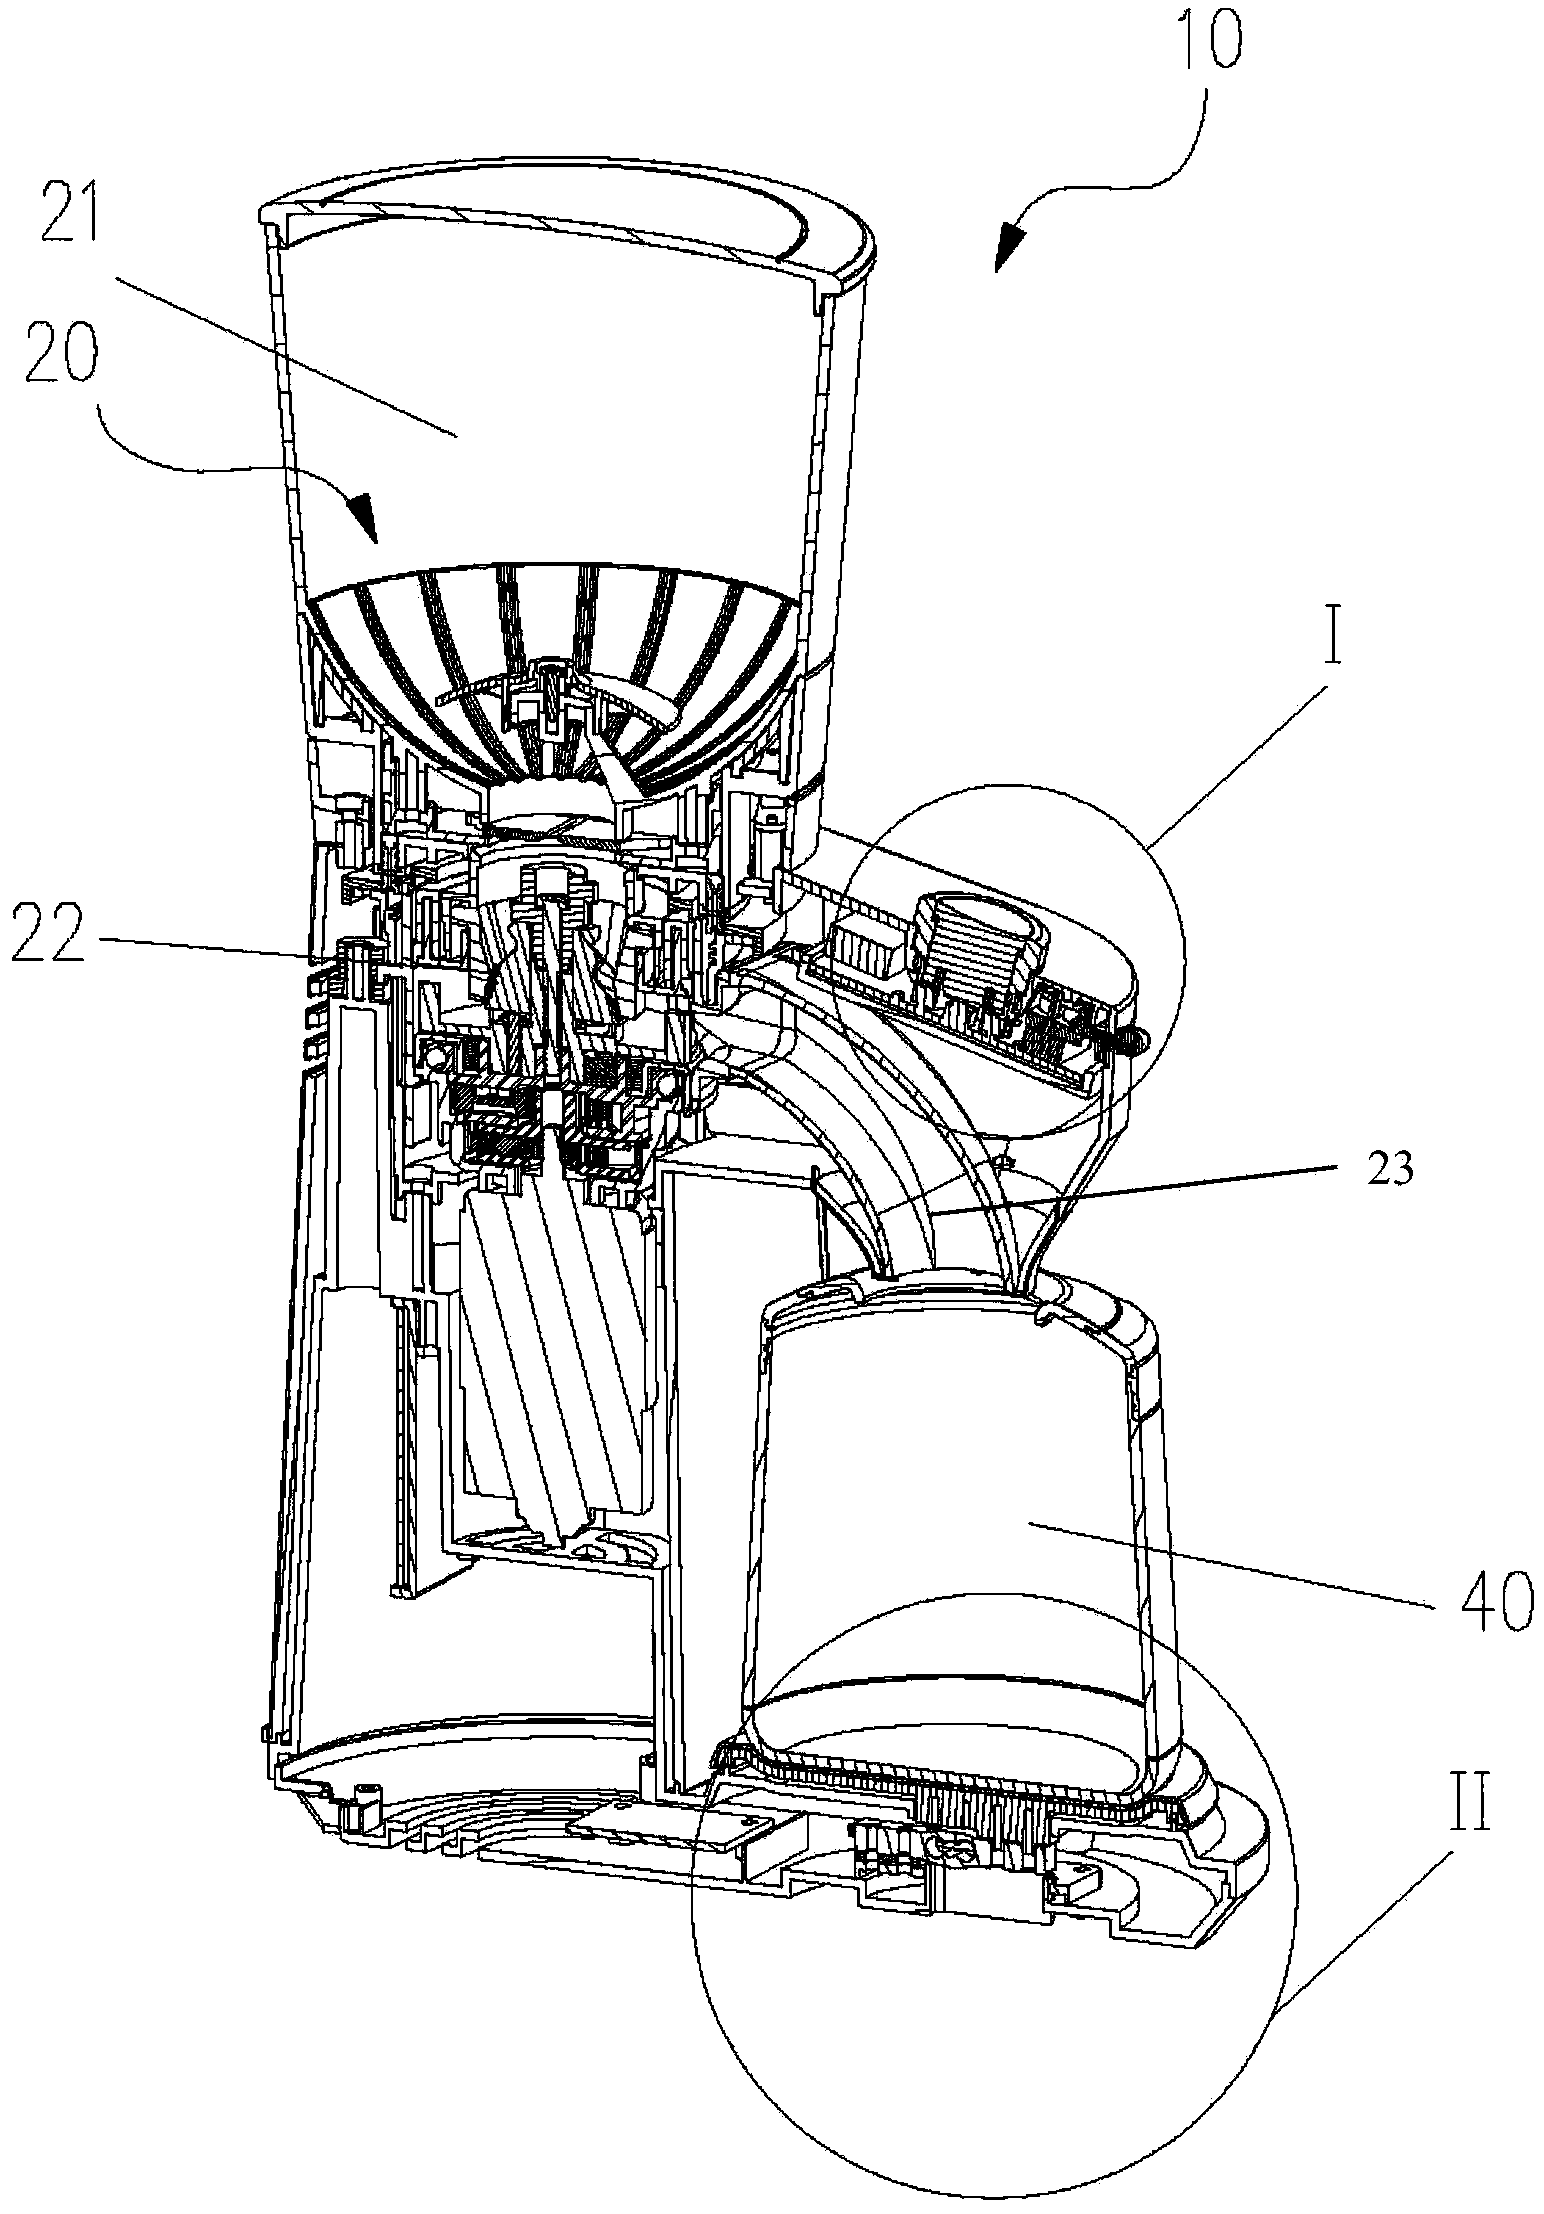 Bean grinding device of coffee machine and coffee machine